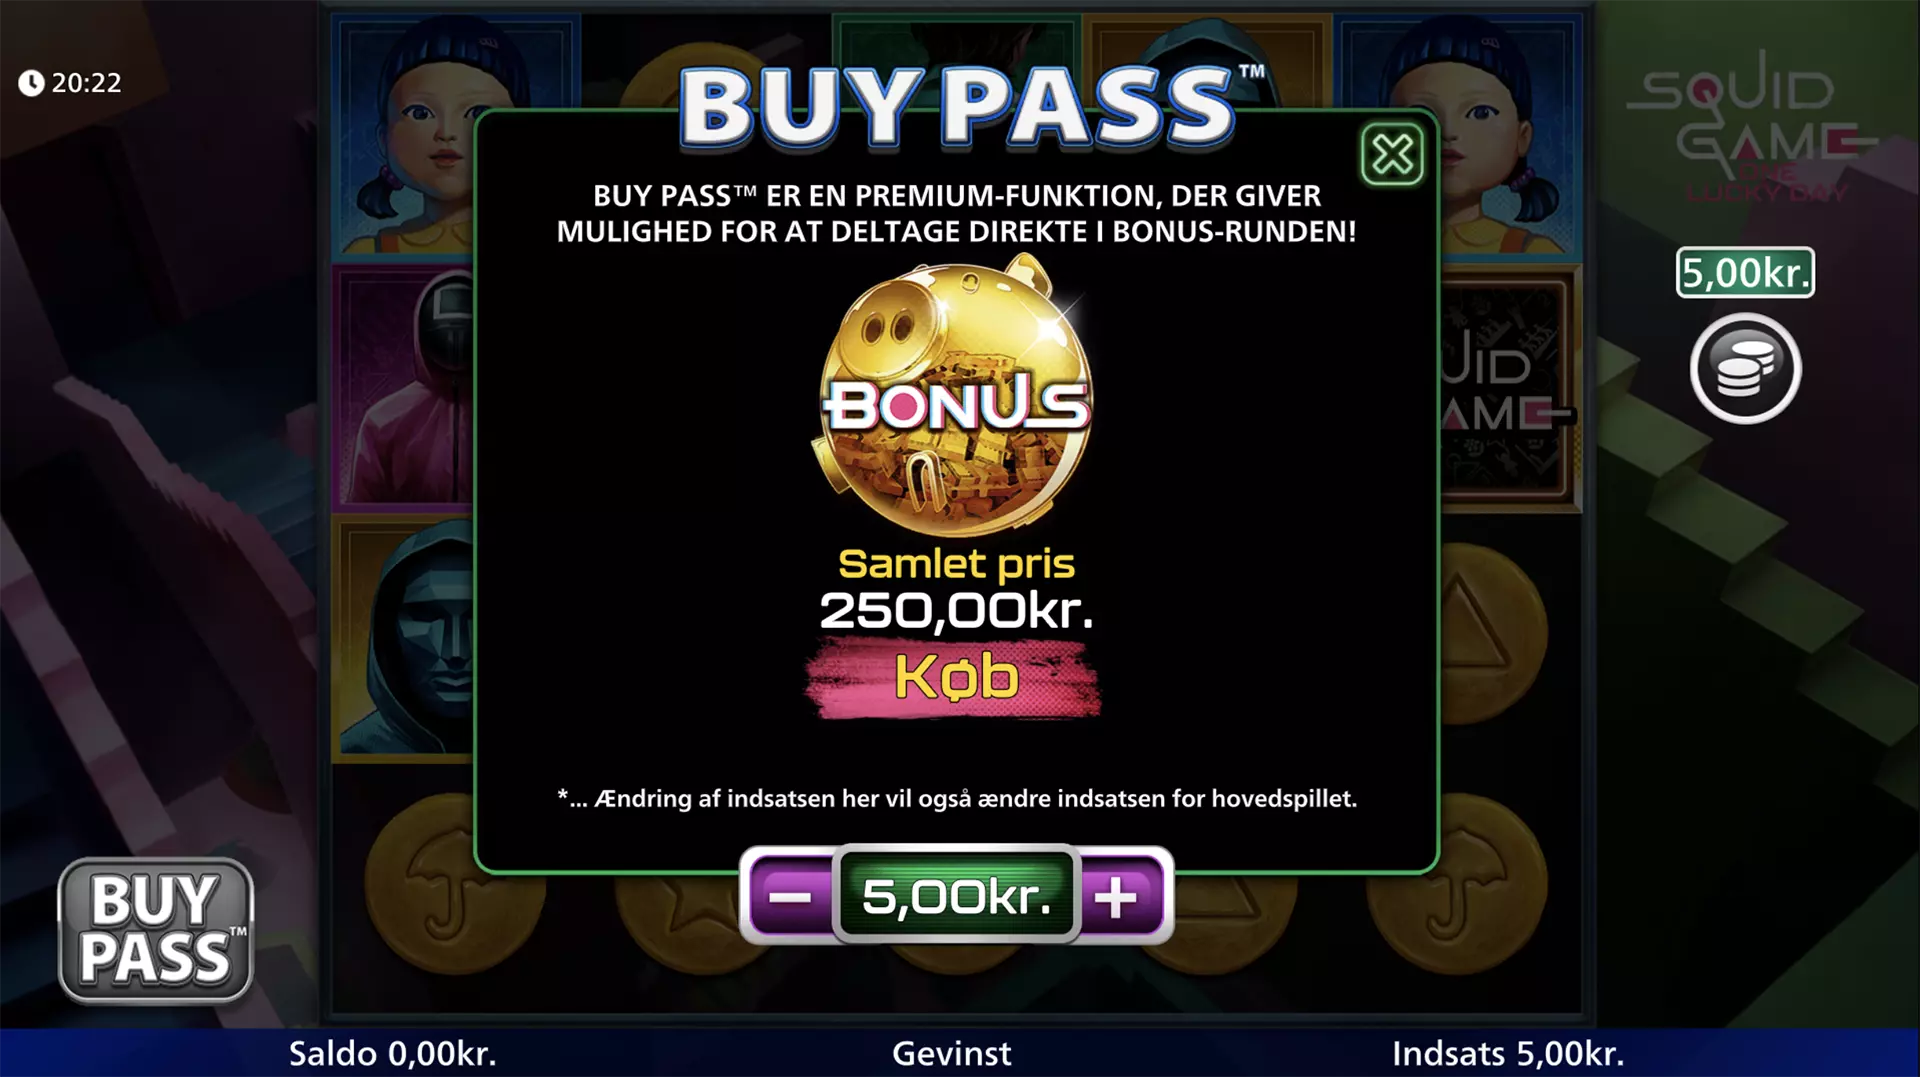 Squid Game - Køb bonus (BUY PASS)